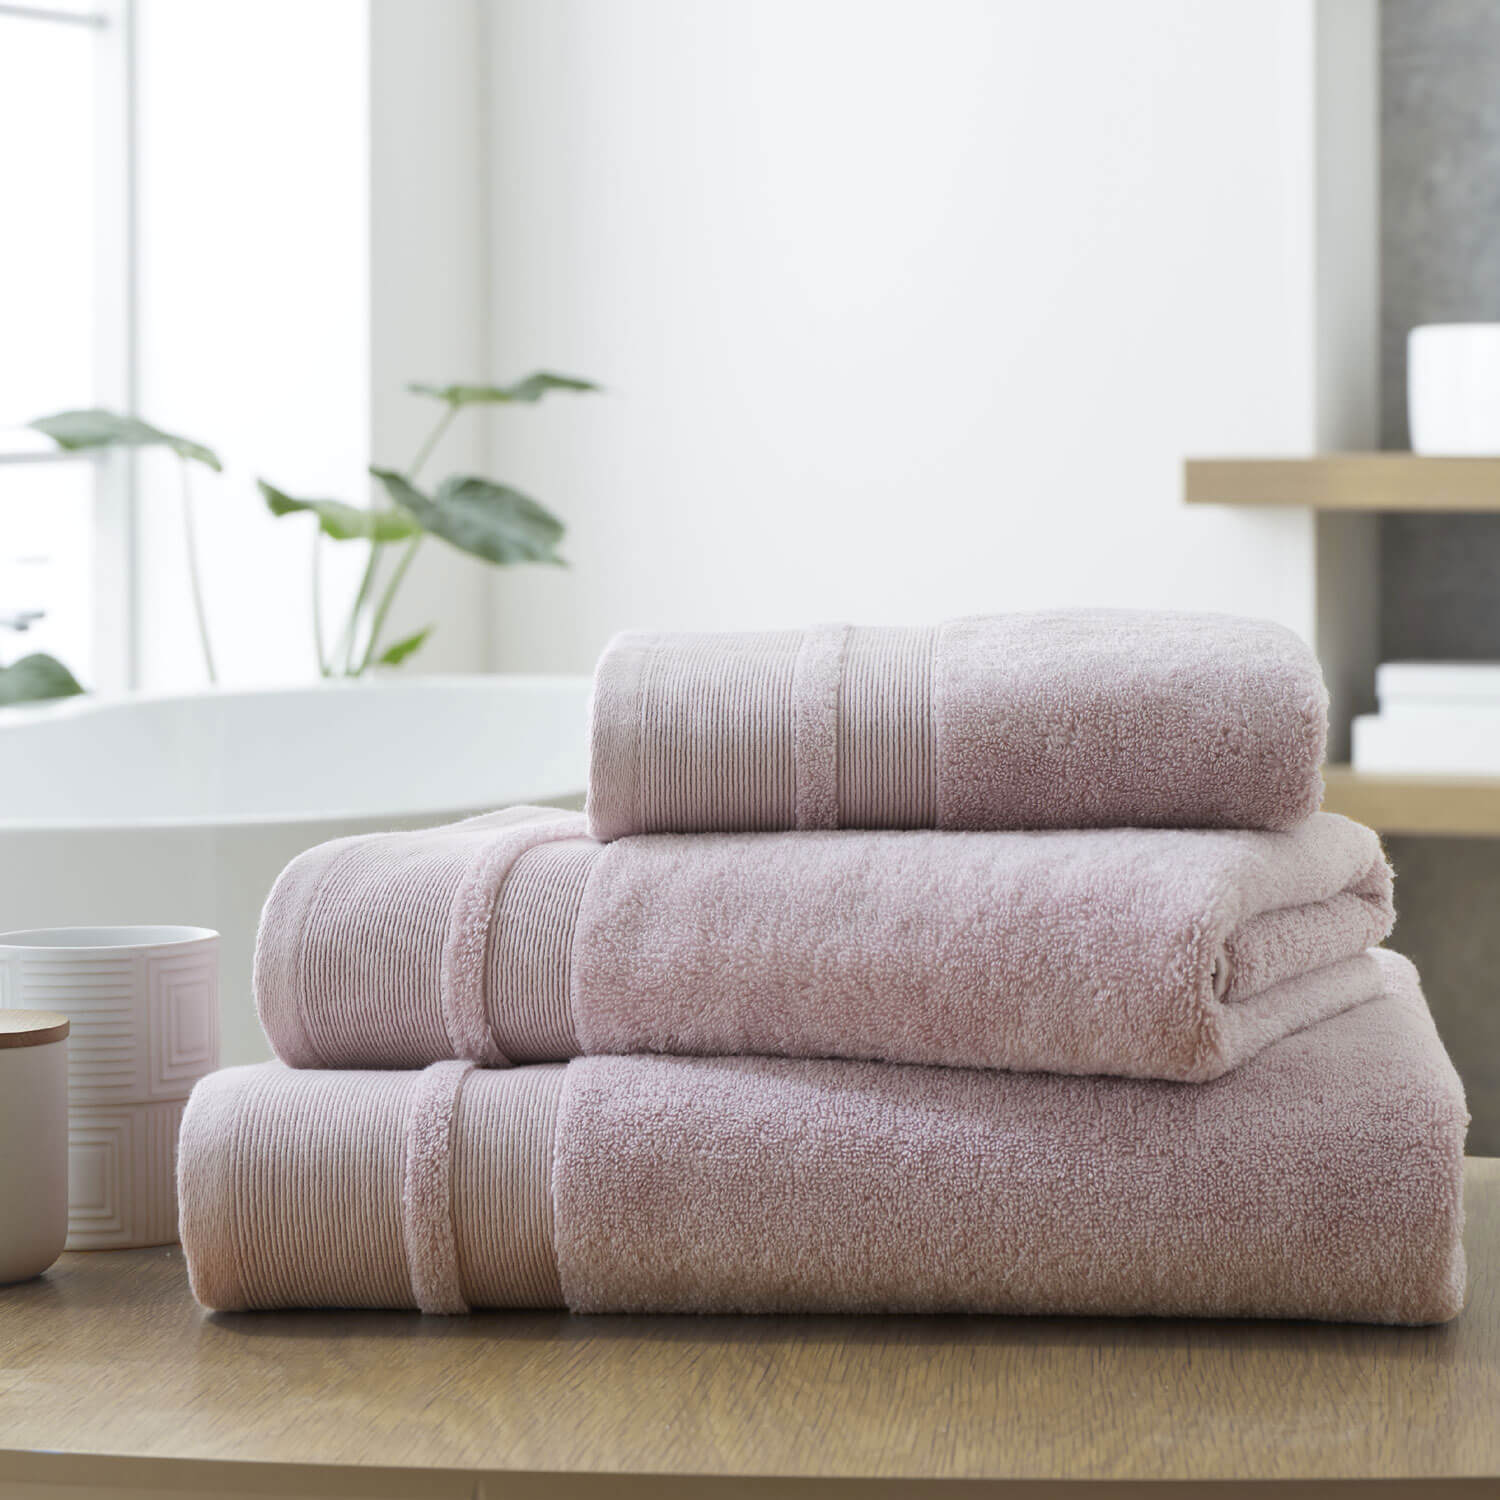 Dorma Zero Twist Cotton Modal Towel - Blush 1 Shaws Department Stores